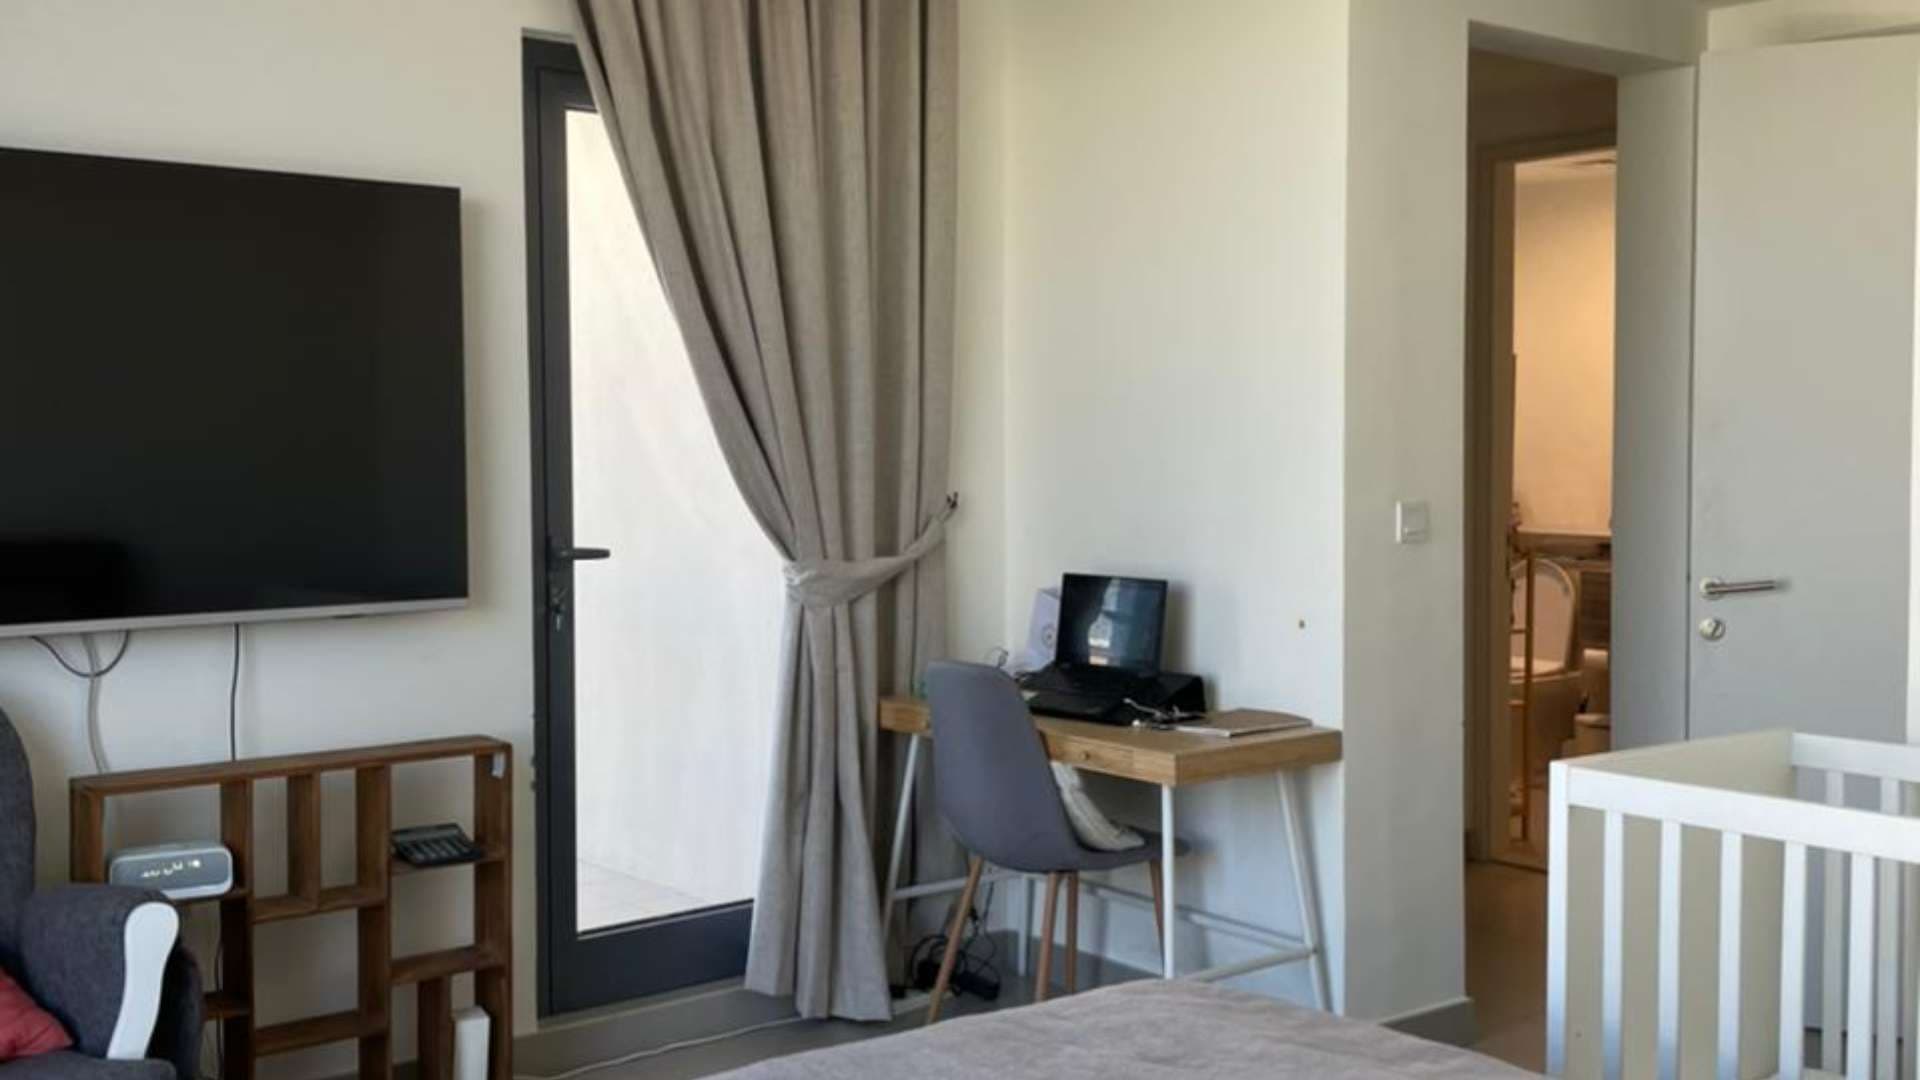 4 Bedroom Townhouse For Rent Maple At Dubai Hills Estate Lp09985 1f934b1b2dda9600.jpeg